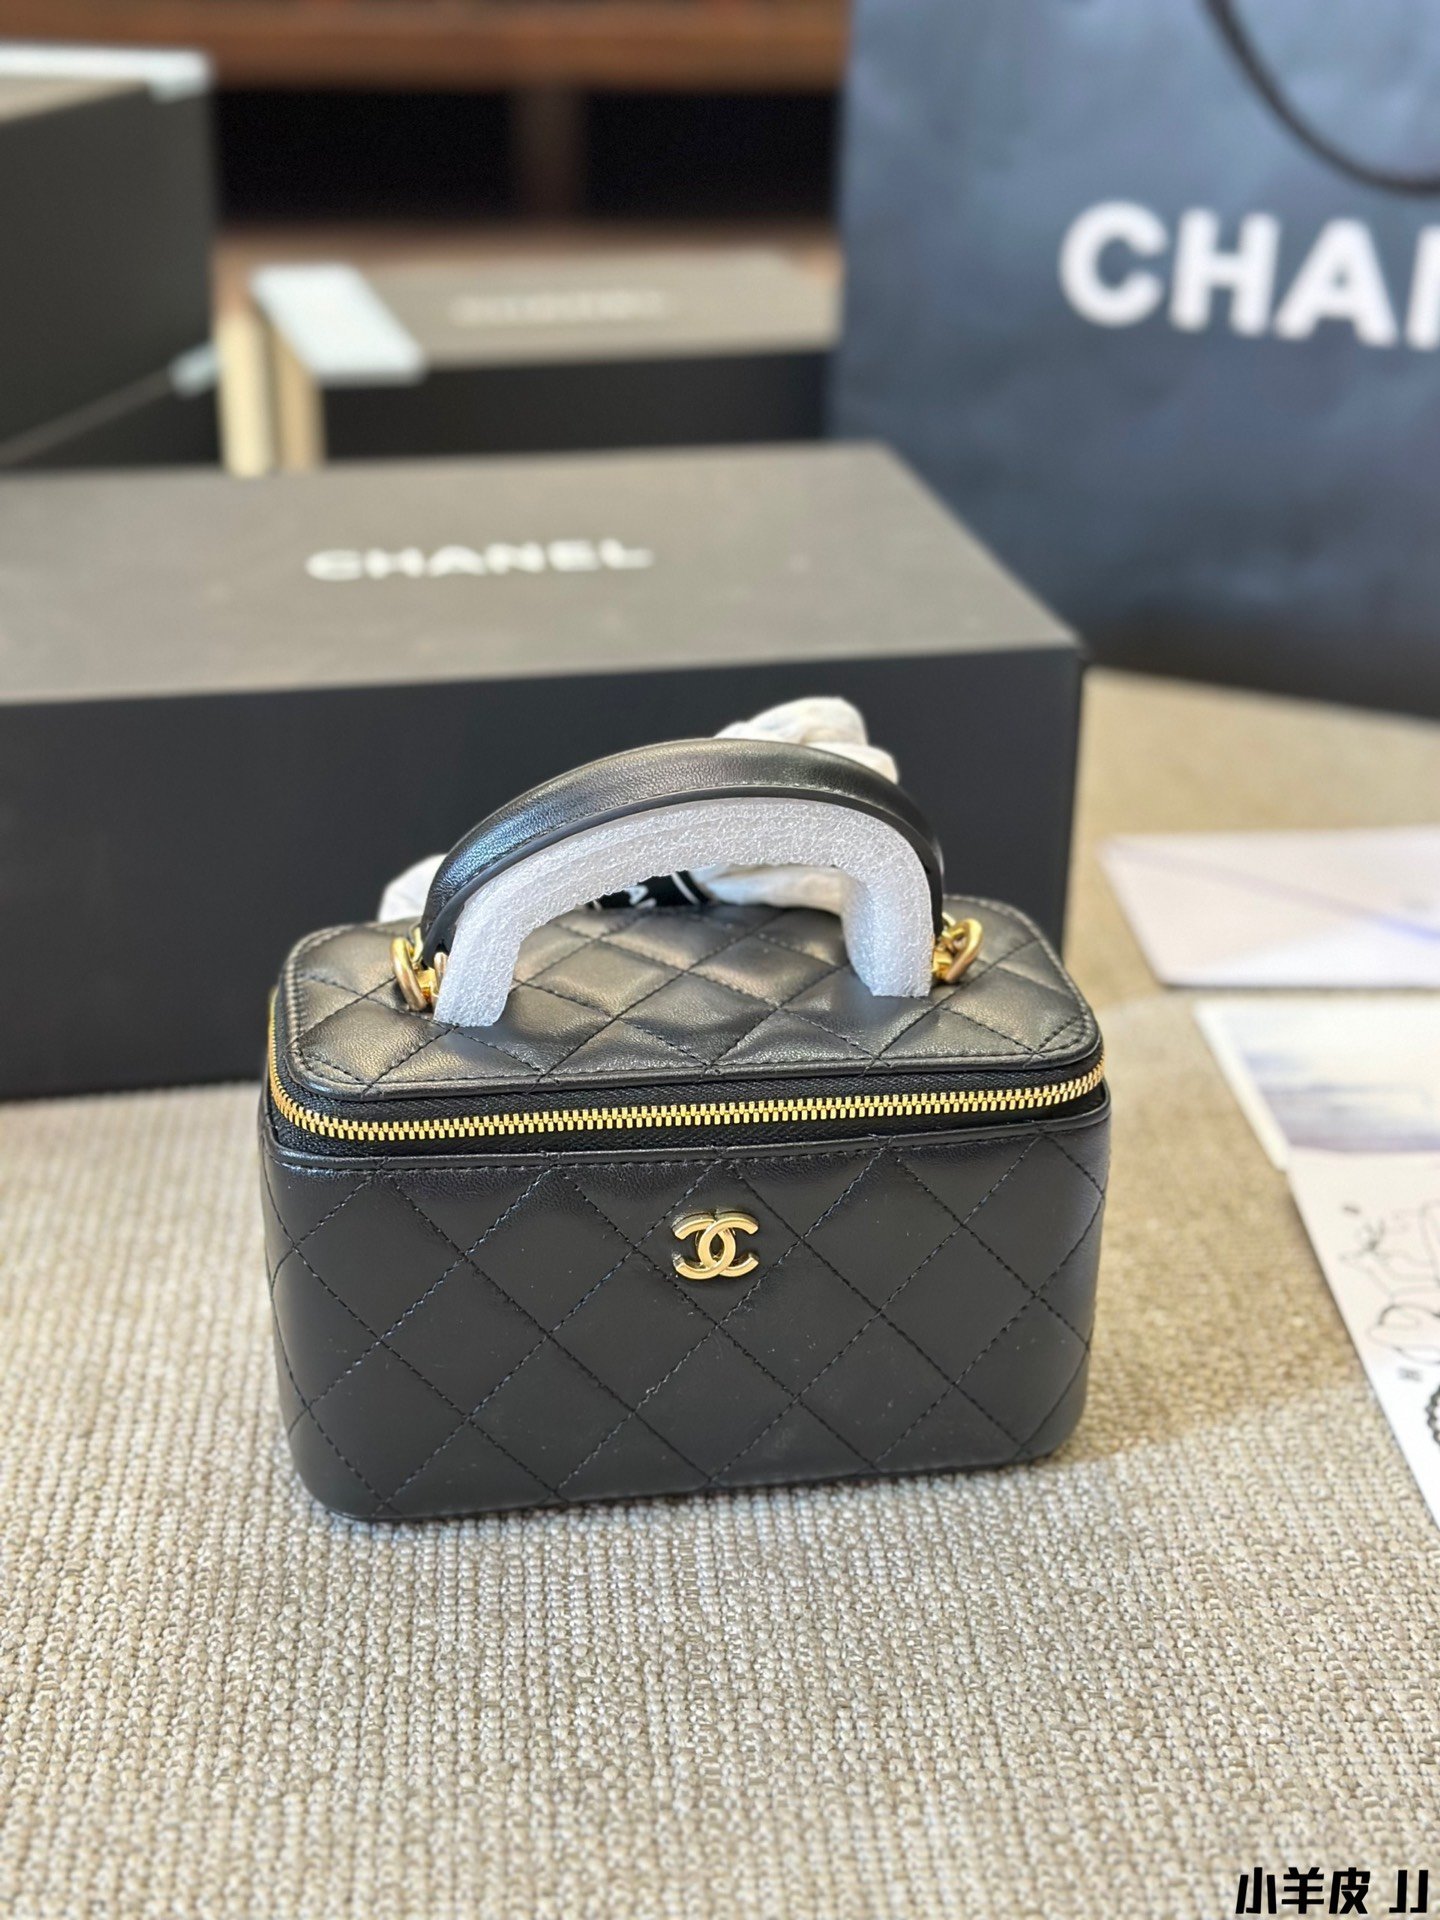 Chanel leather handbag